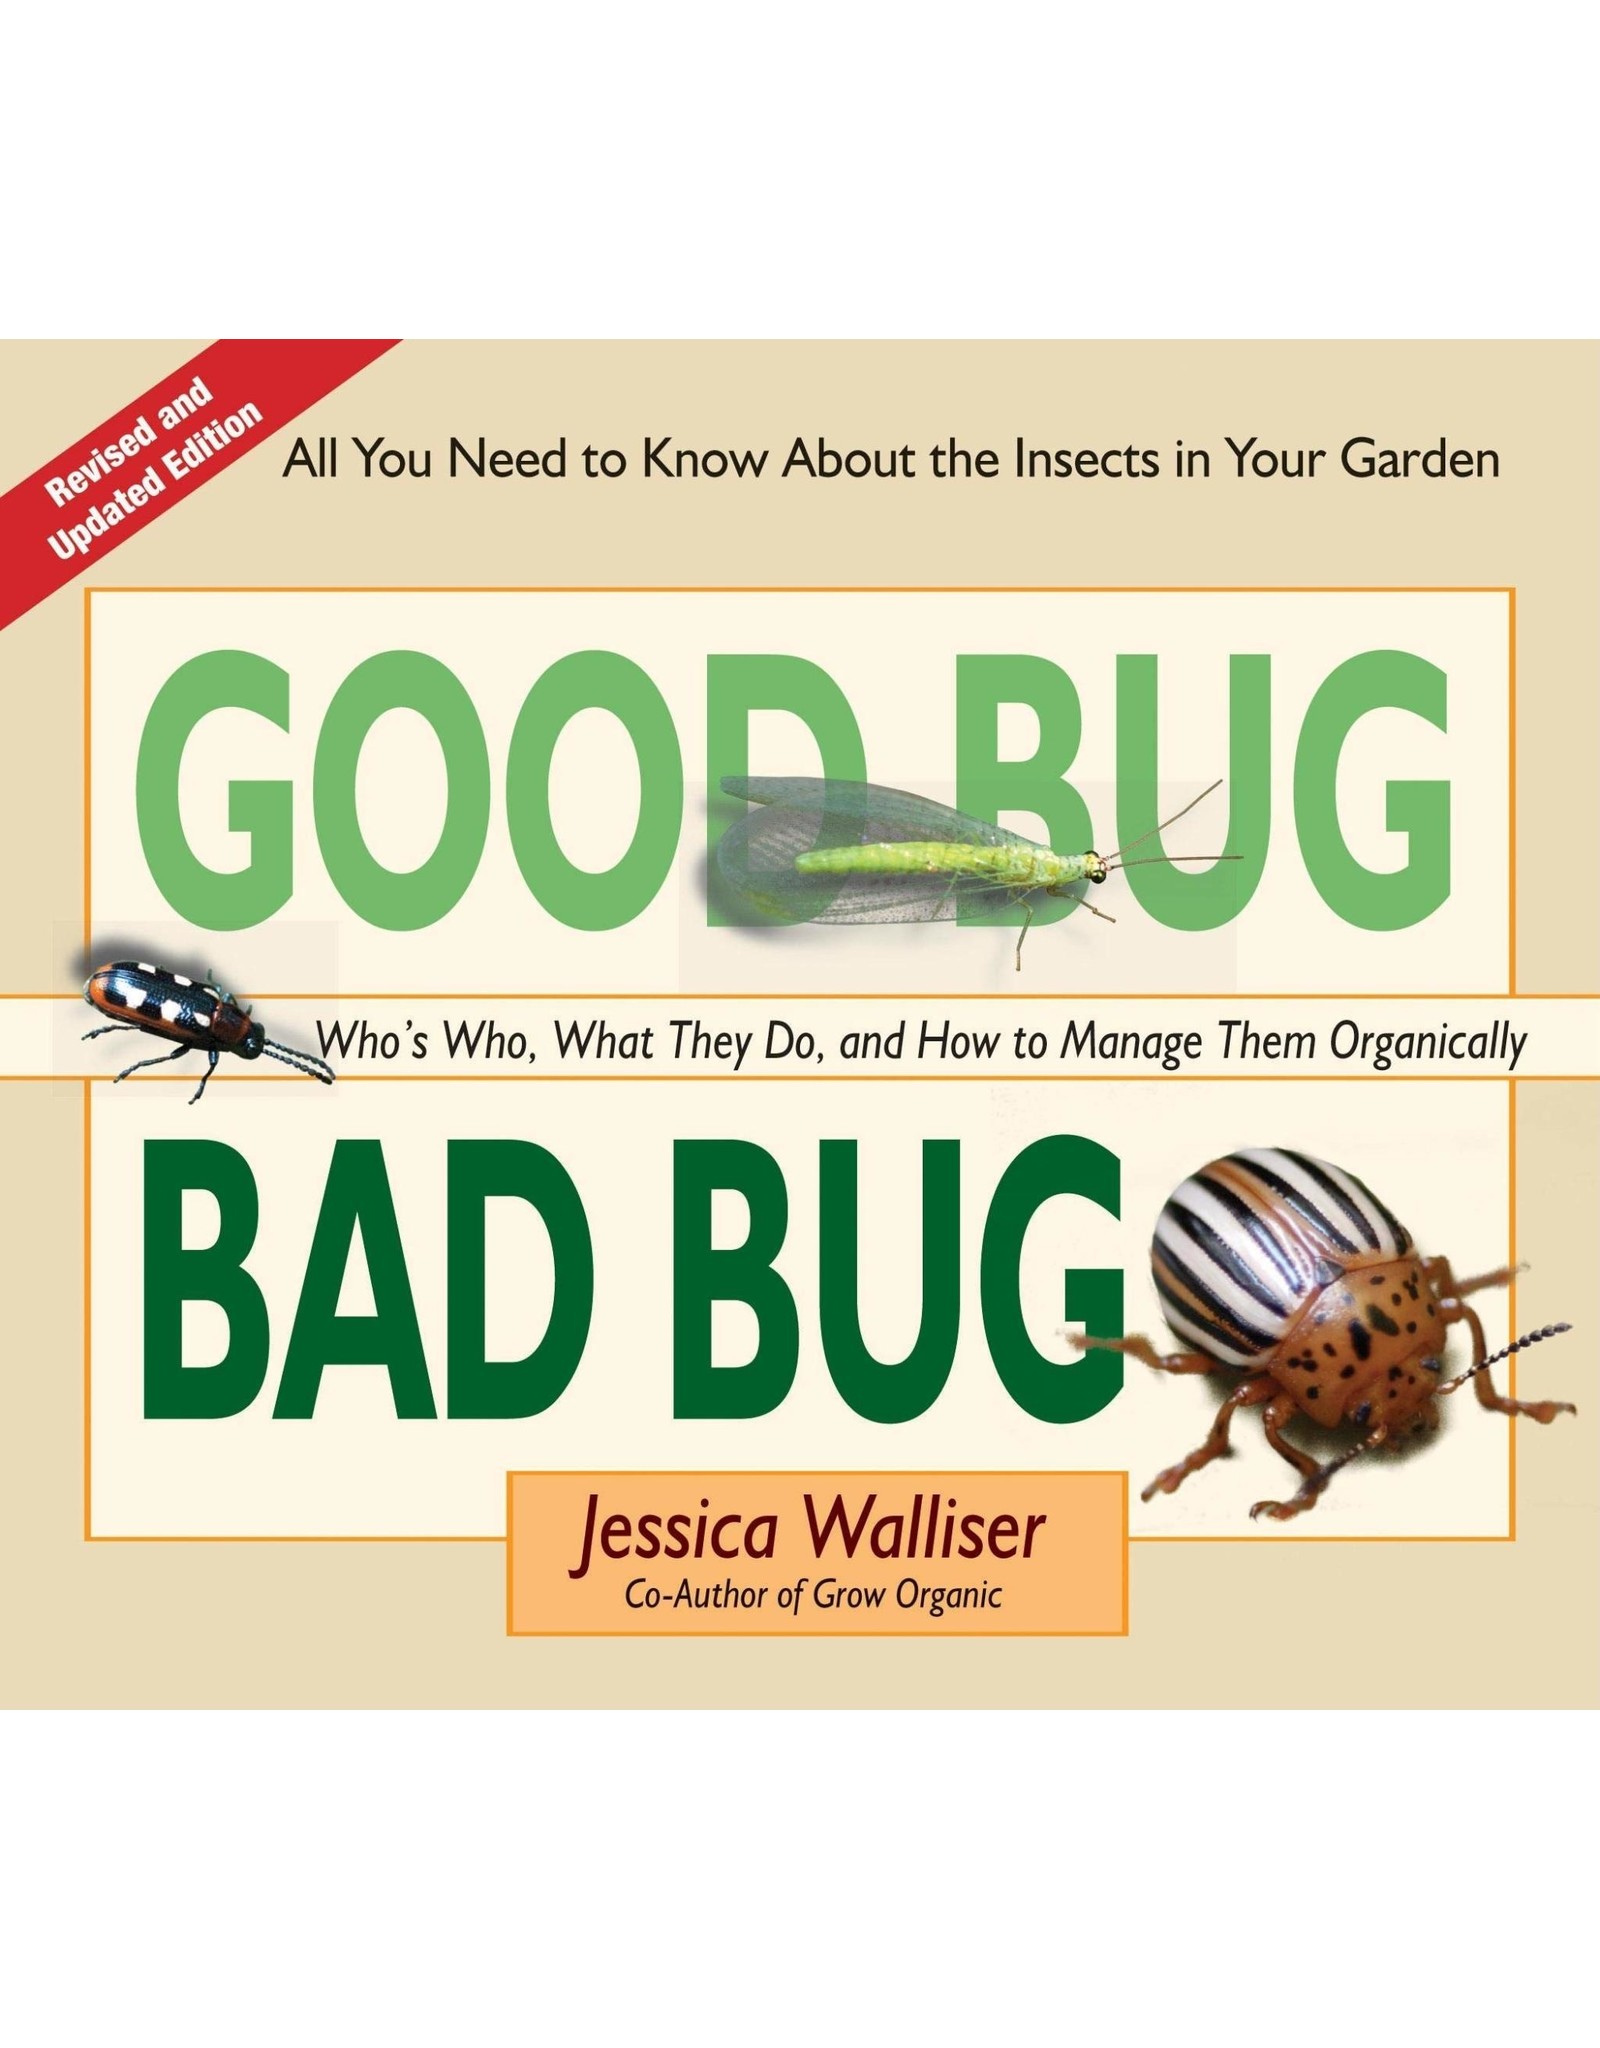 Good Bug Bad Bug